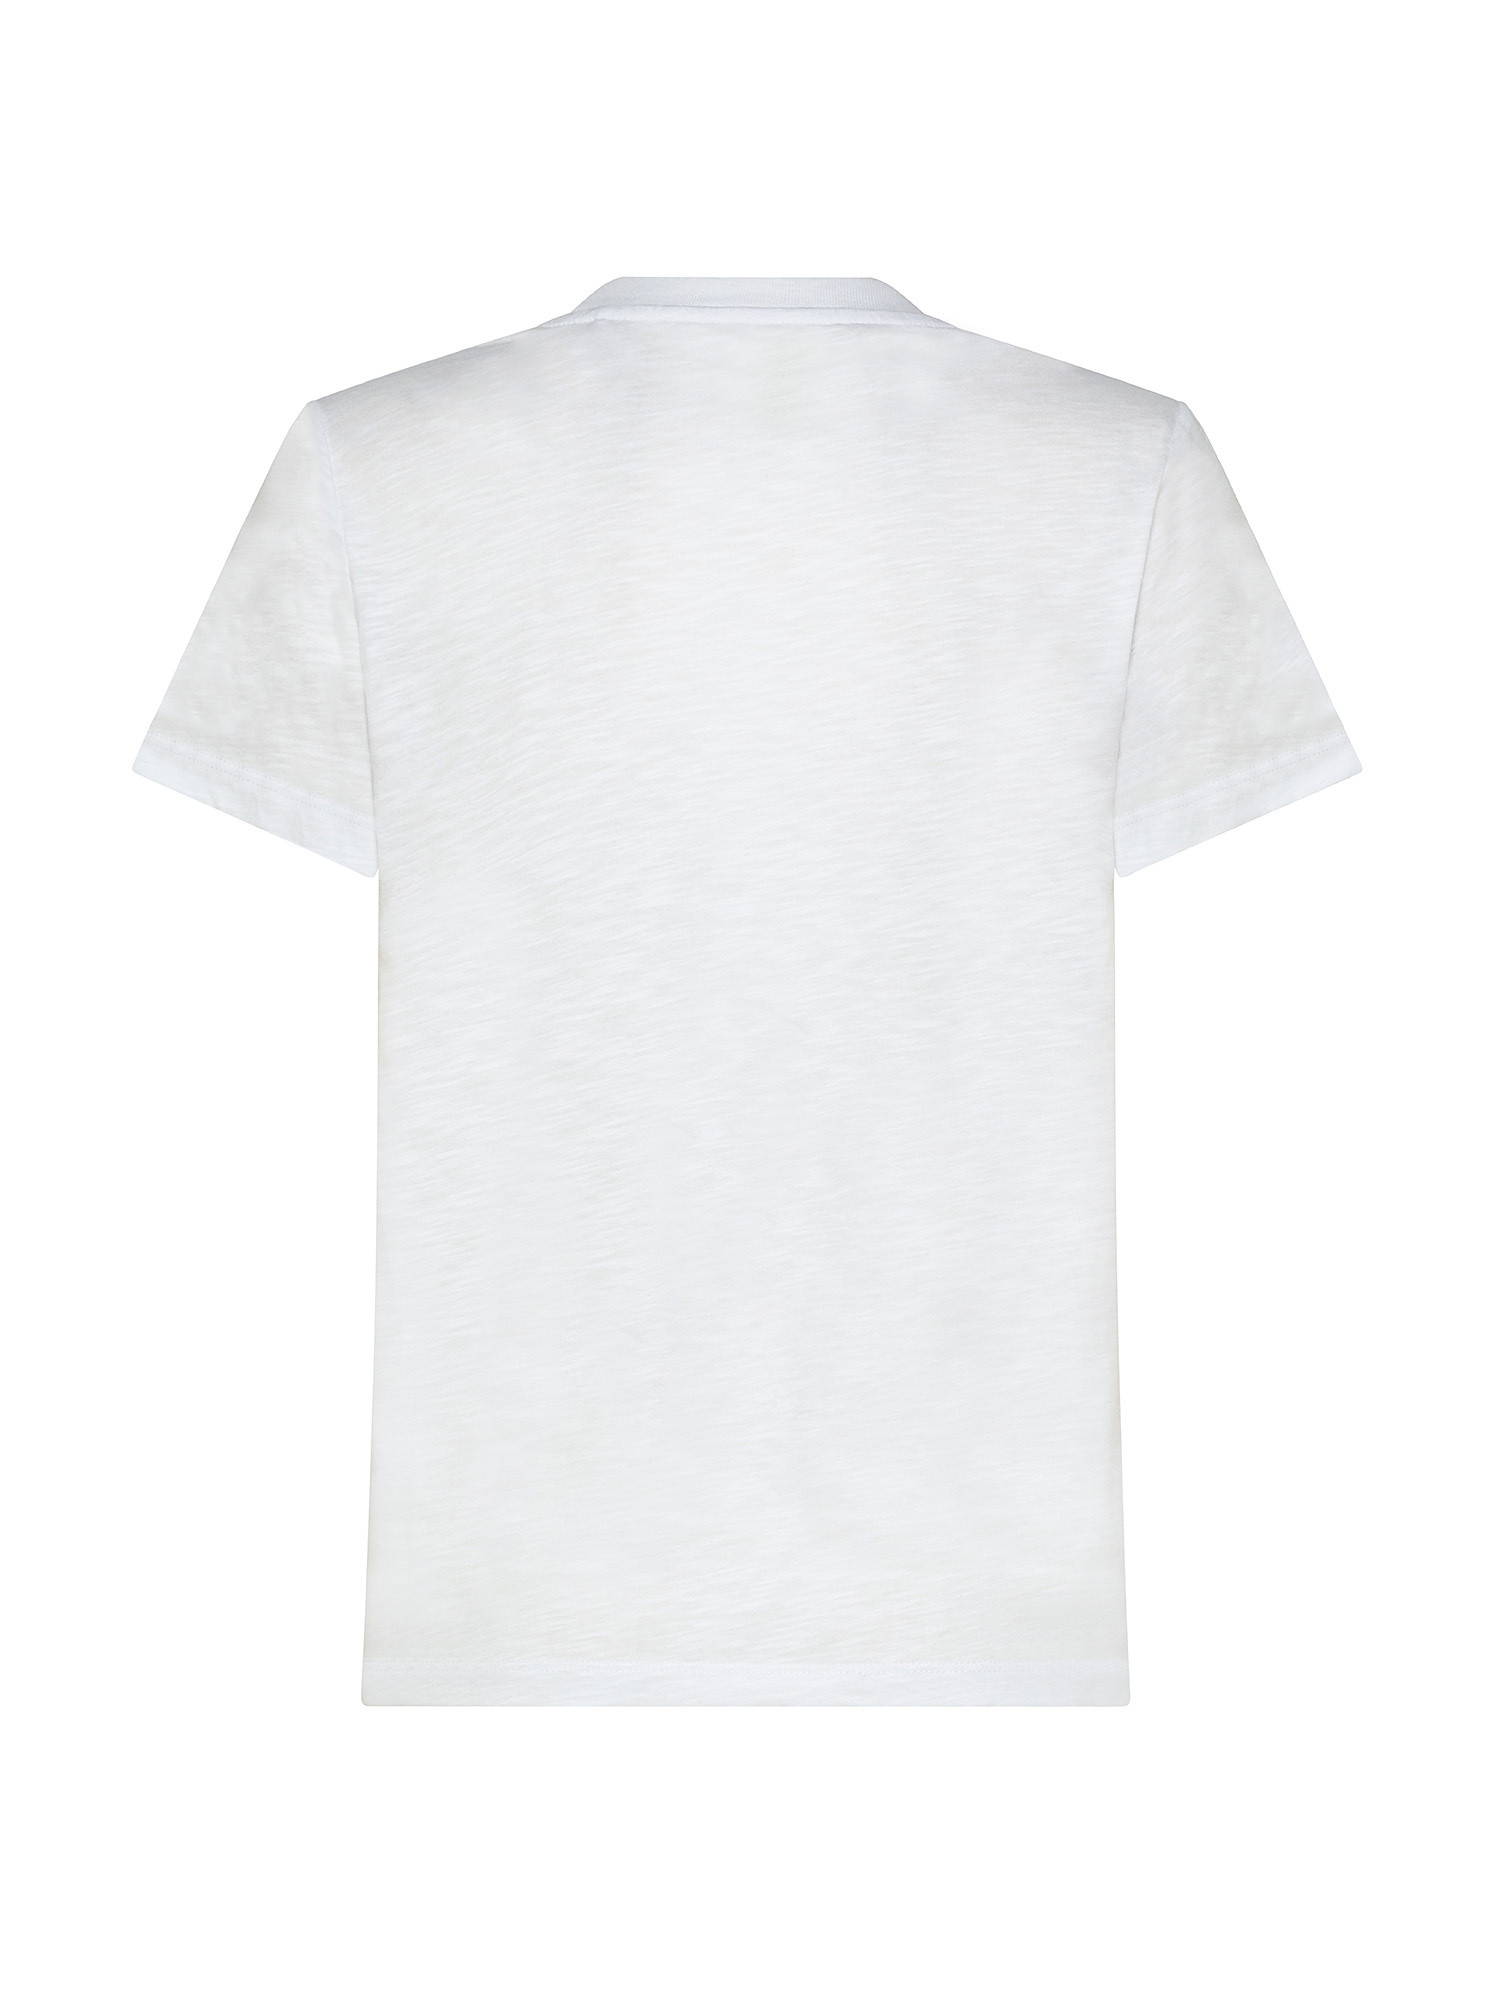 T-shirt Rosemery con stampa logo, Bianco, large image number 1